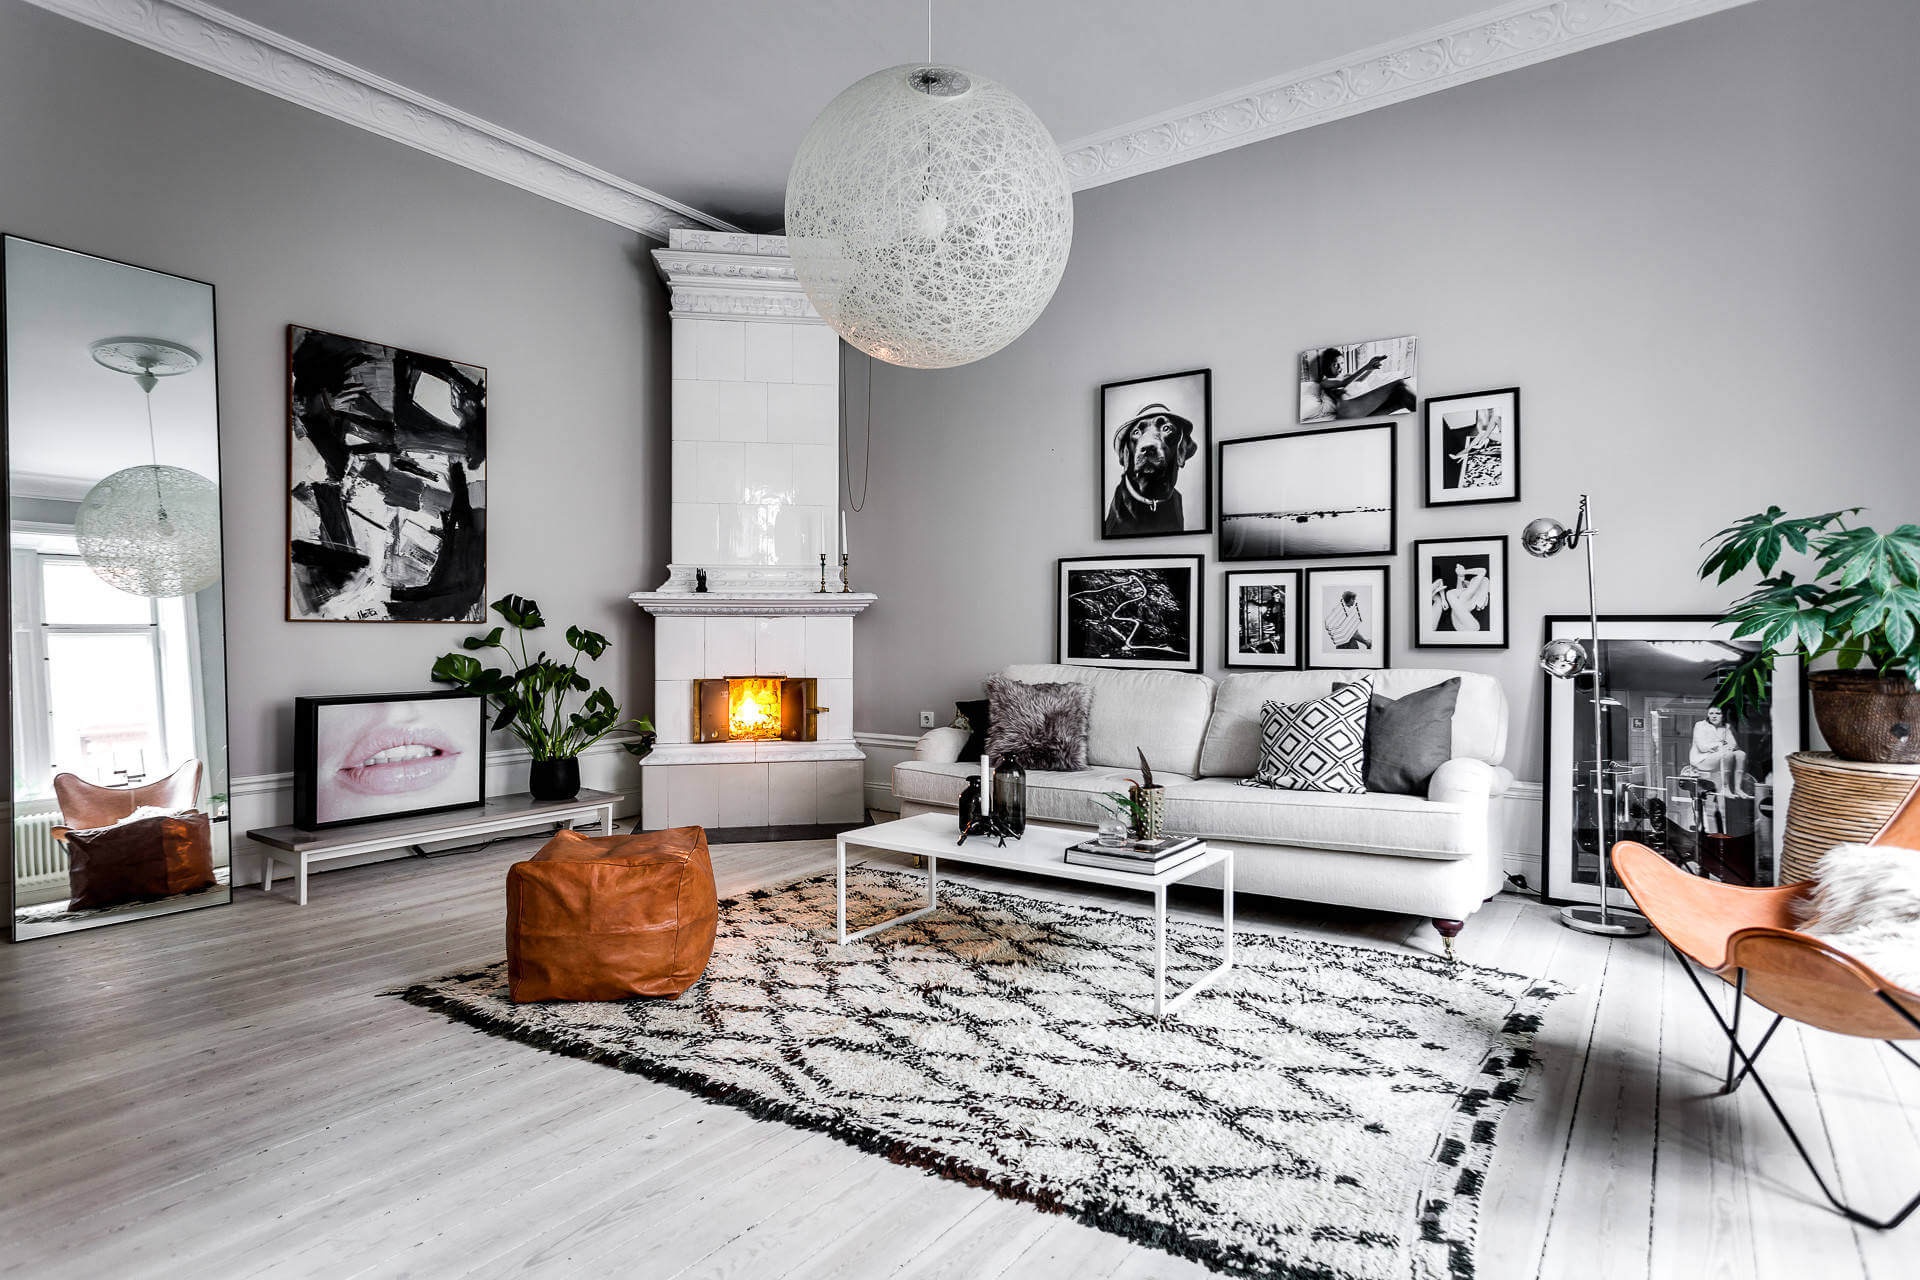 Fireplace Furniture Living Room Room Sofa 1920x1280